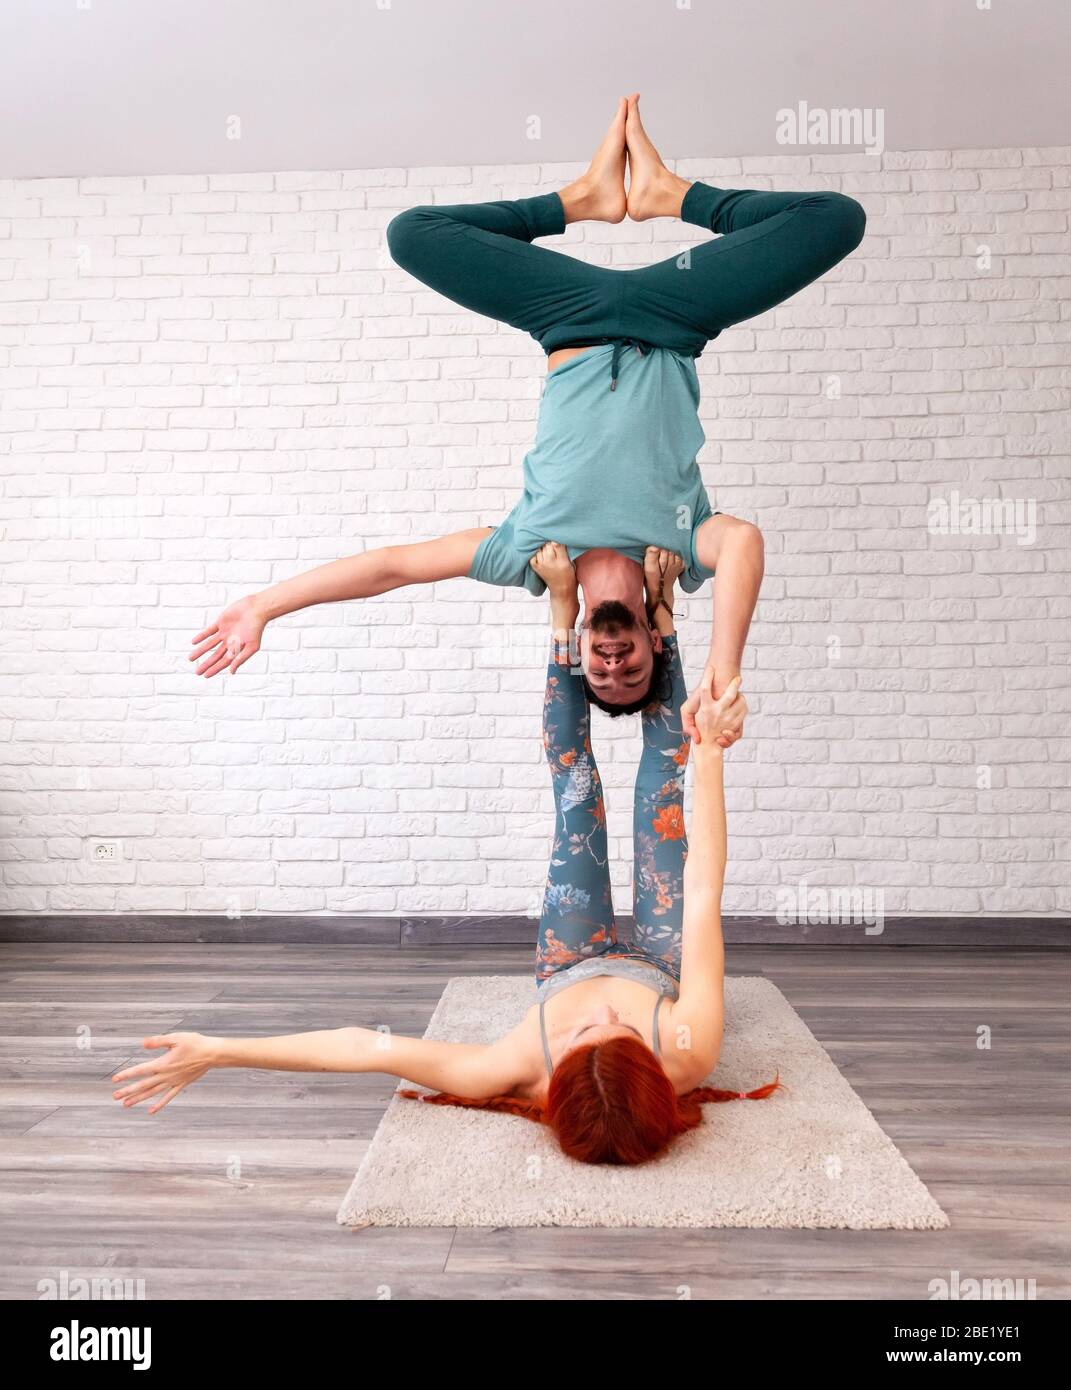 10 Yoga Poses You Can Do With Your Partner - BookYogaRetreats.com